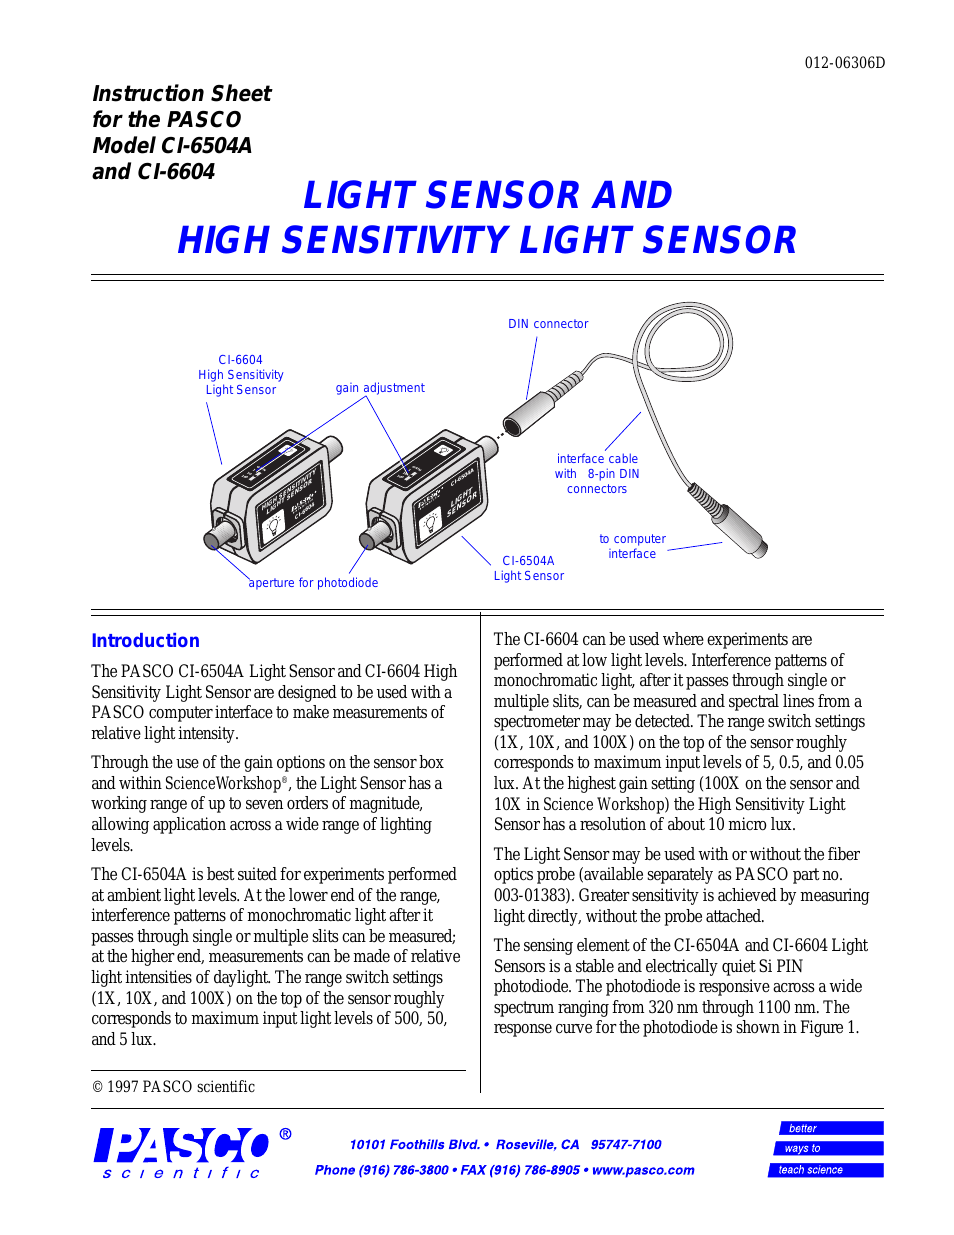 CI-6604 HIGH SENSITIVITY LIGHT SENSOR